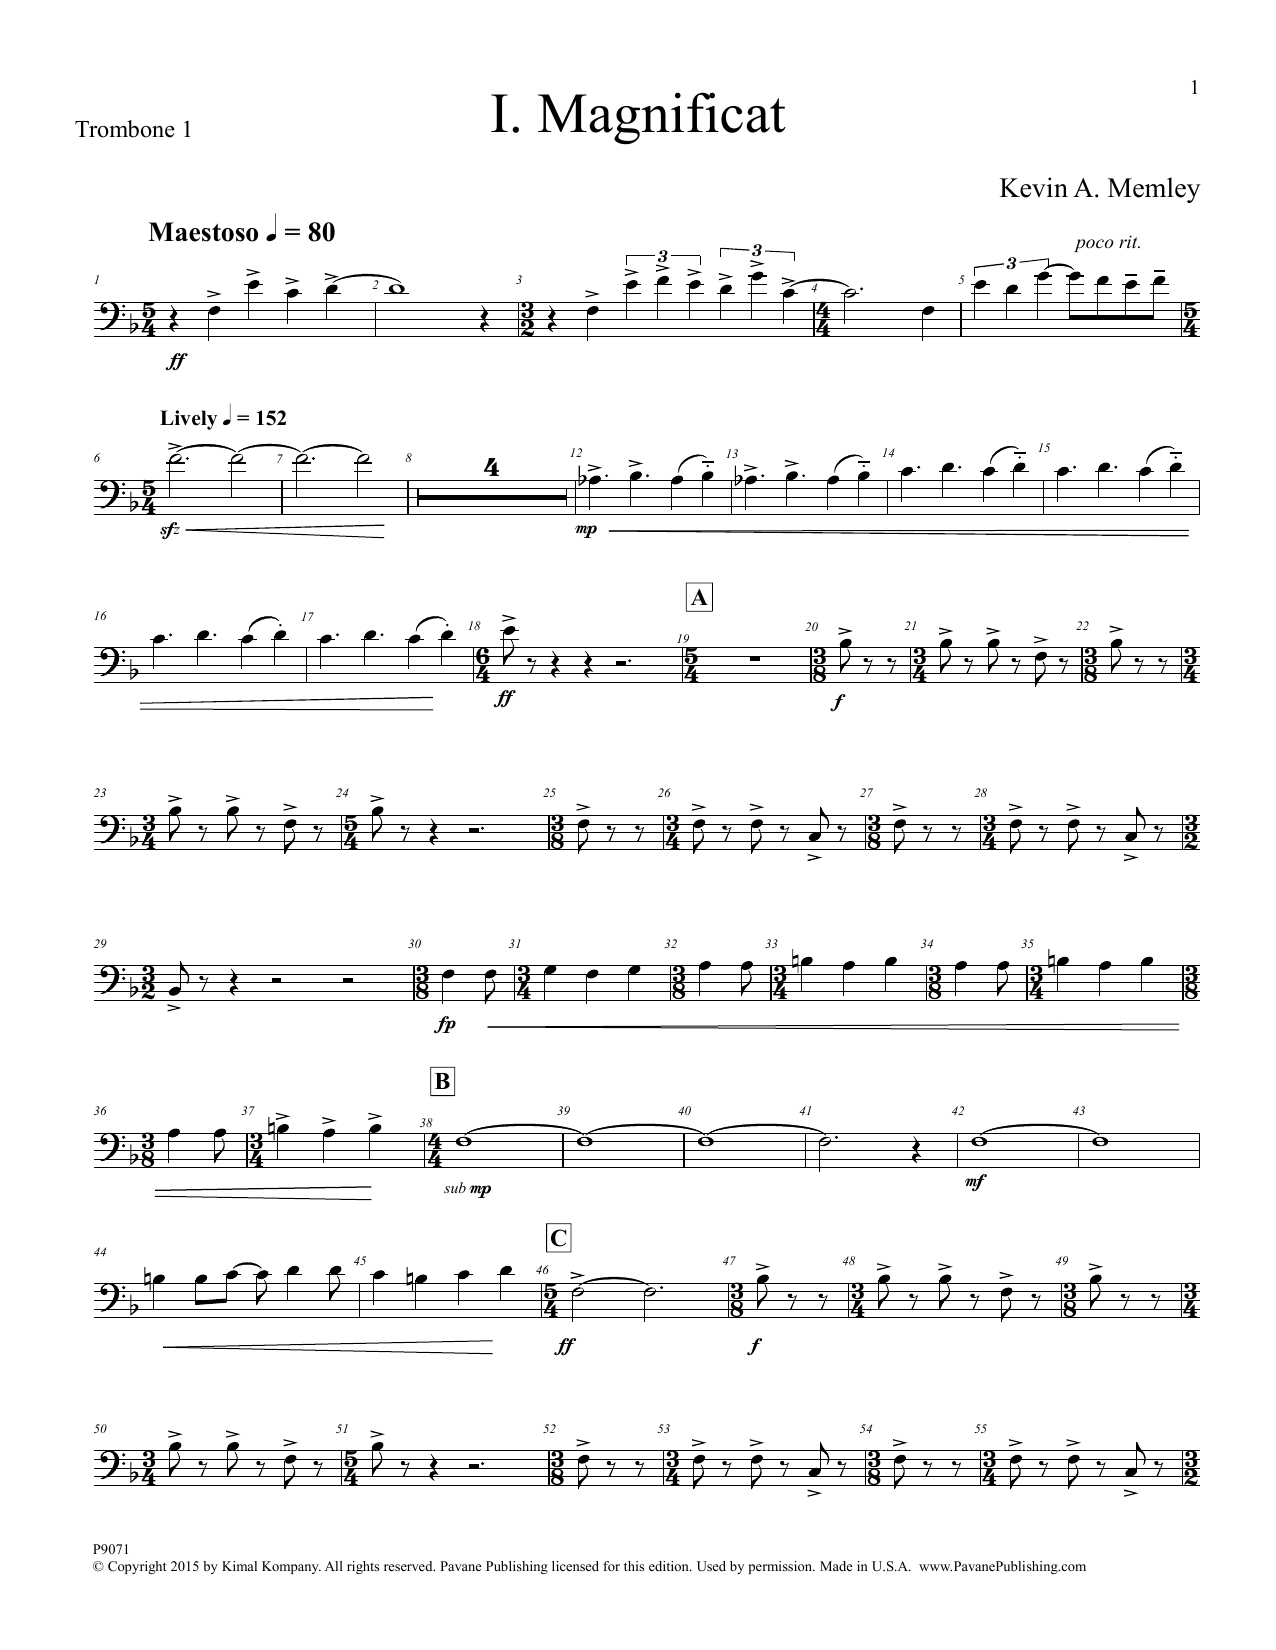 Download Kevin A. Memley Magnificat - Trombone 1 Sheet Music